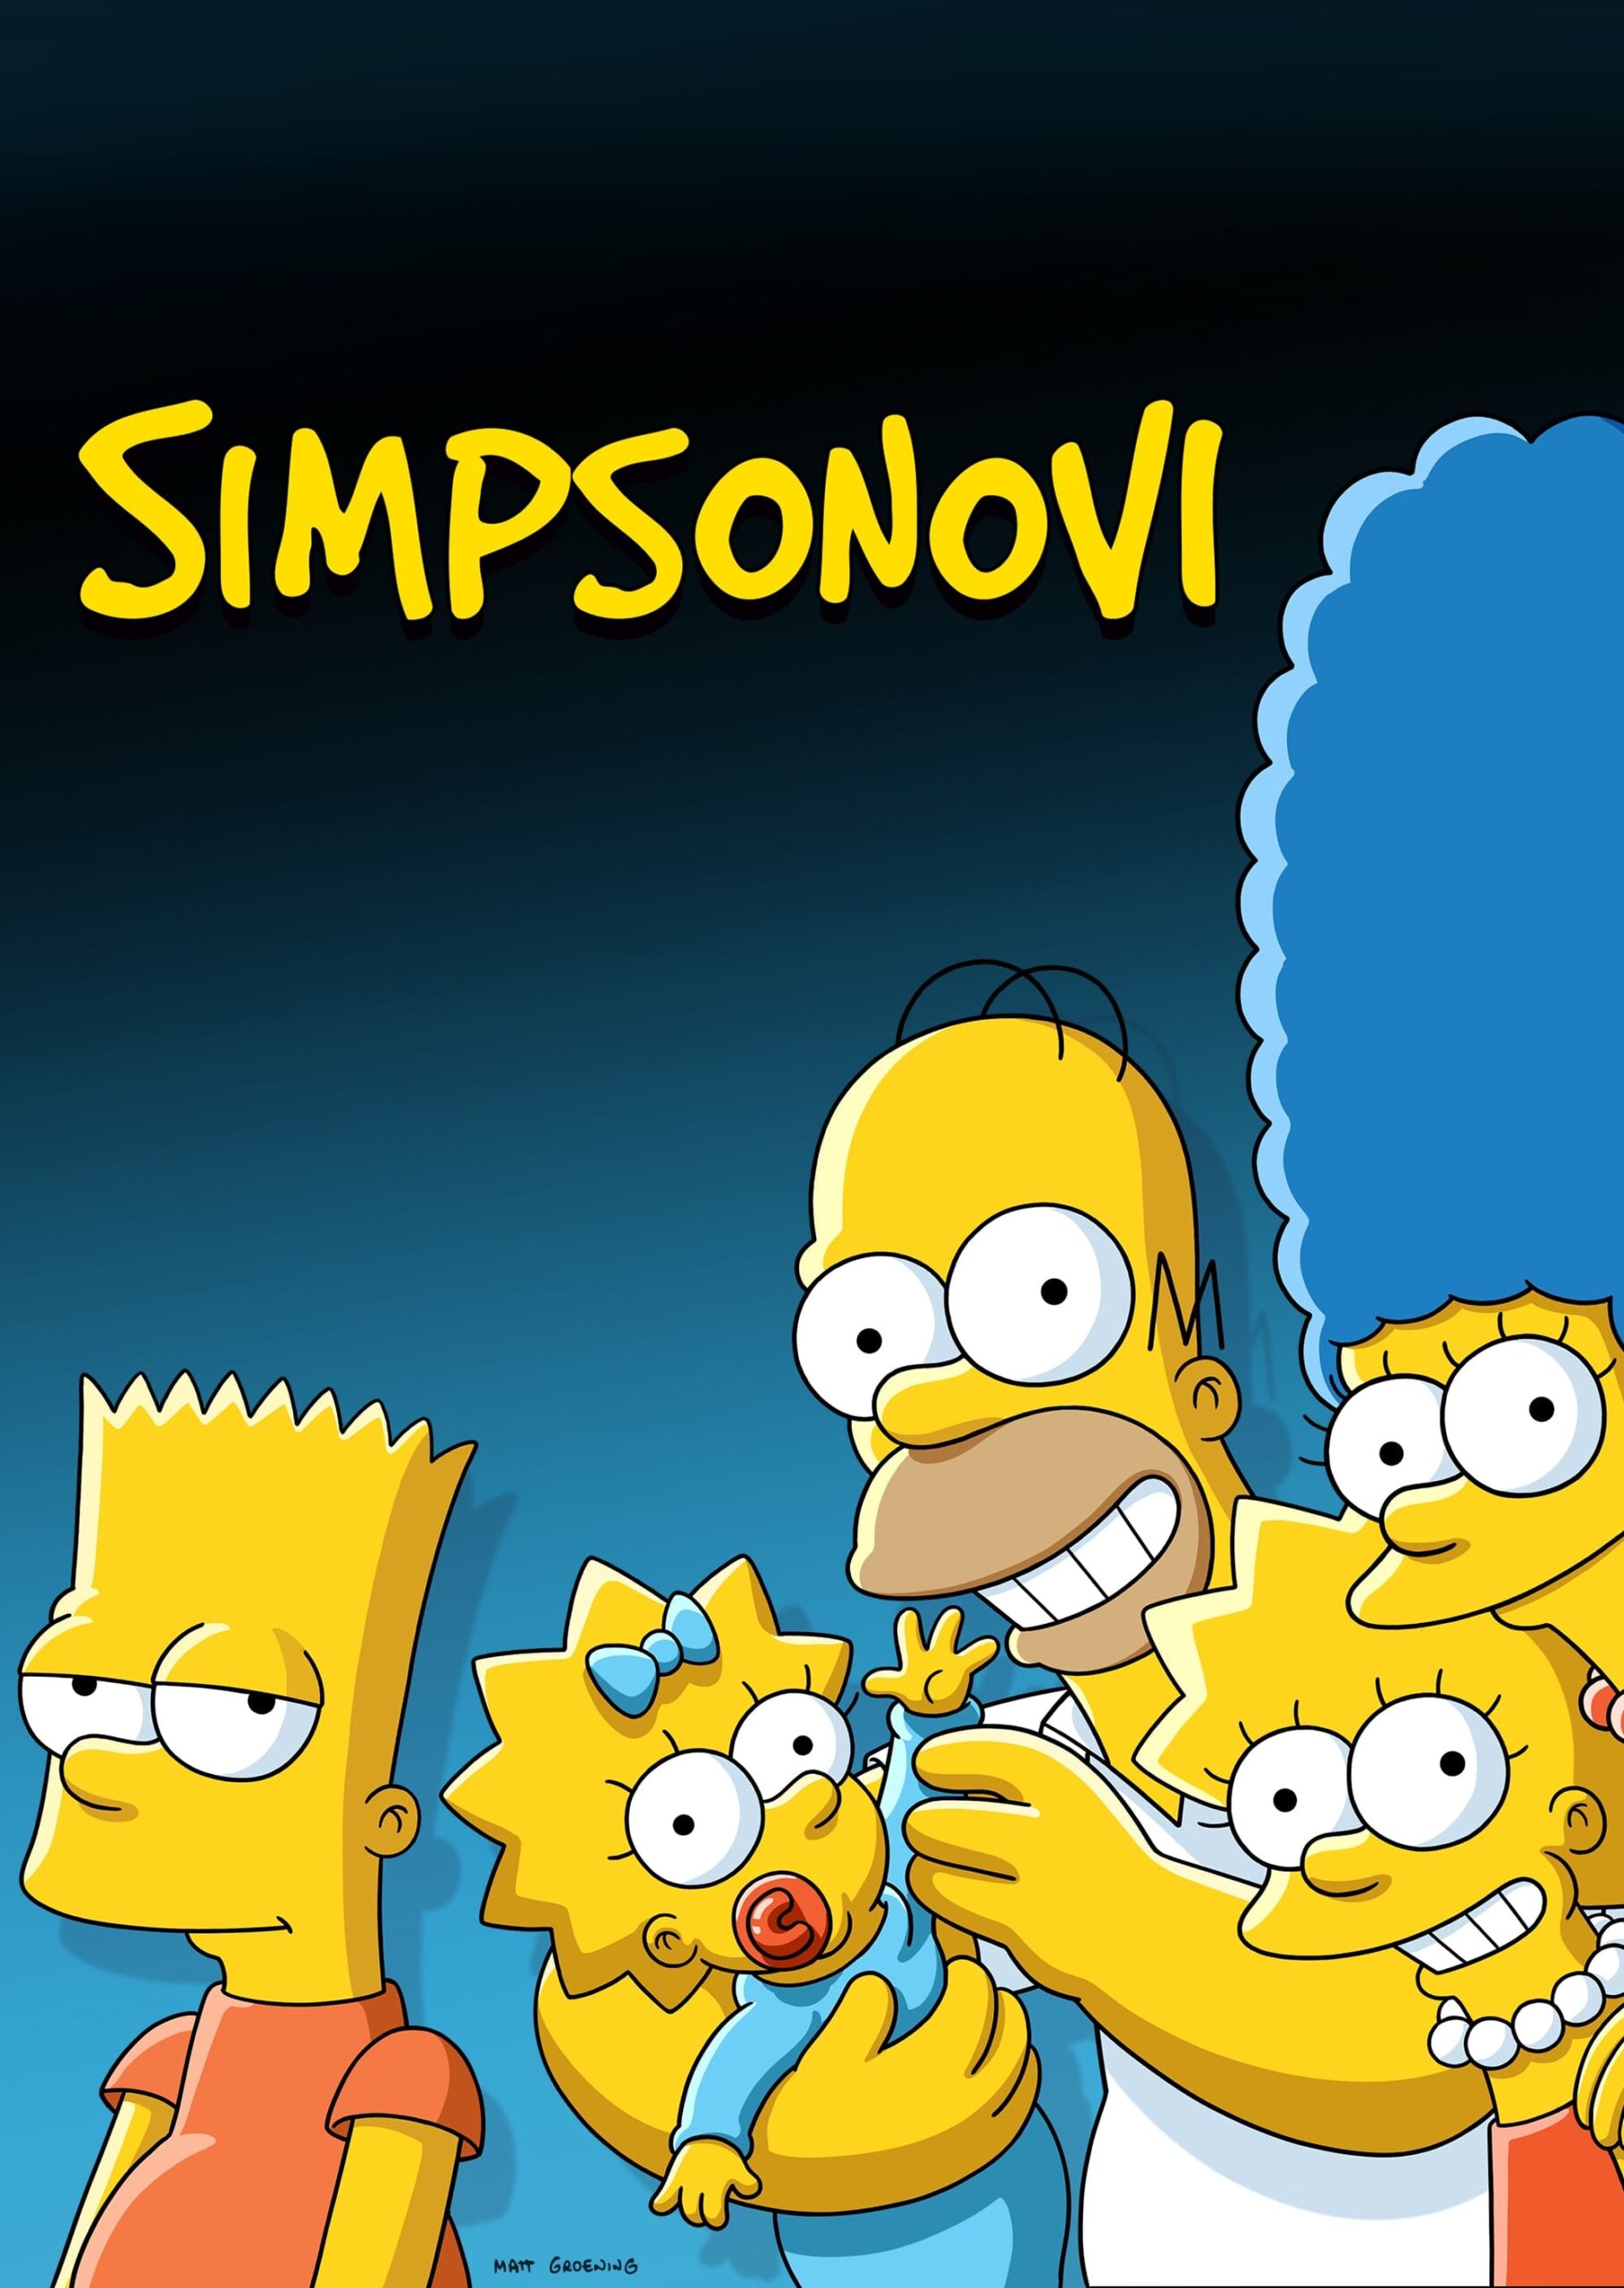 Plakát pro film “Simpsonovi”